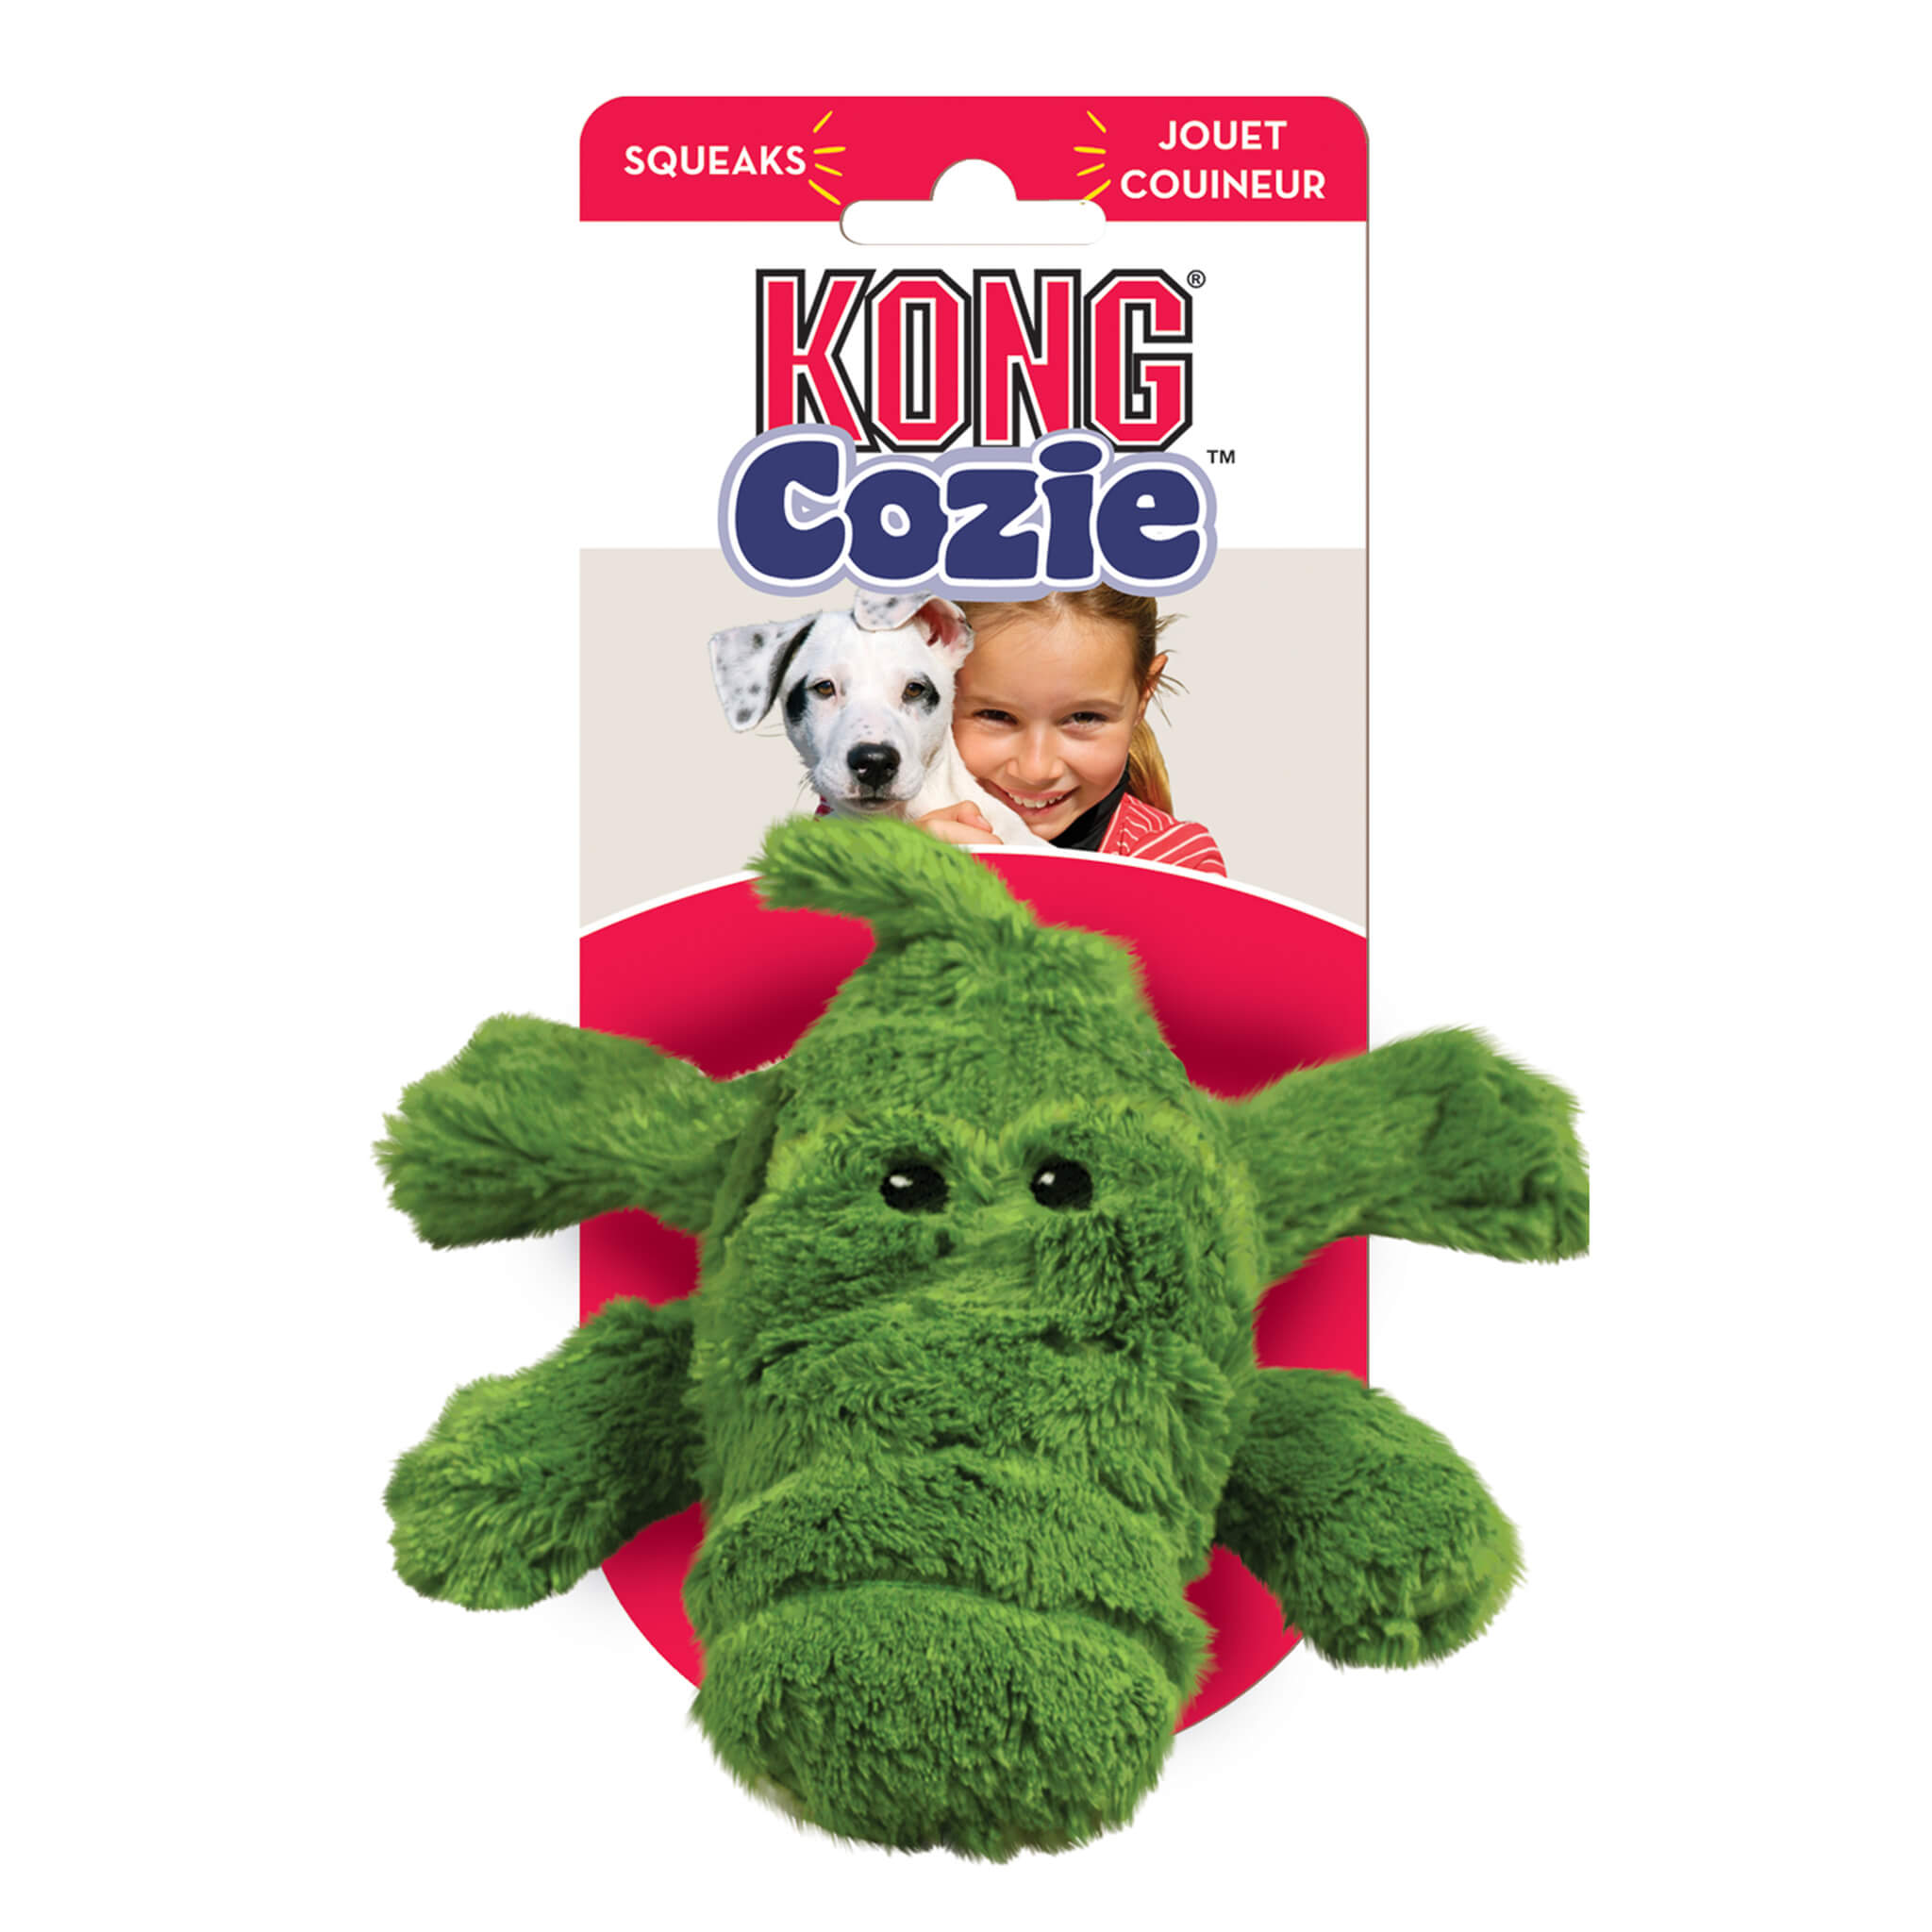 Kong dog toy - cozie ali alligator